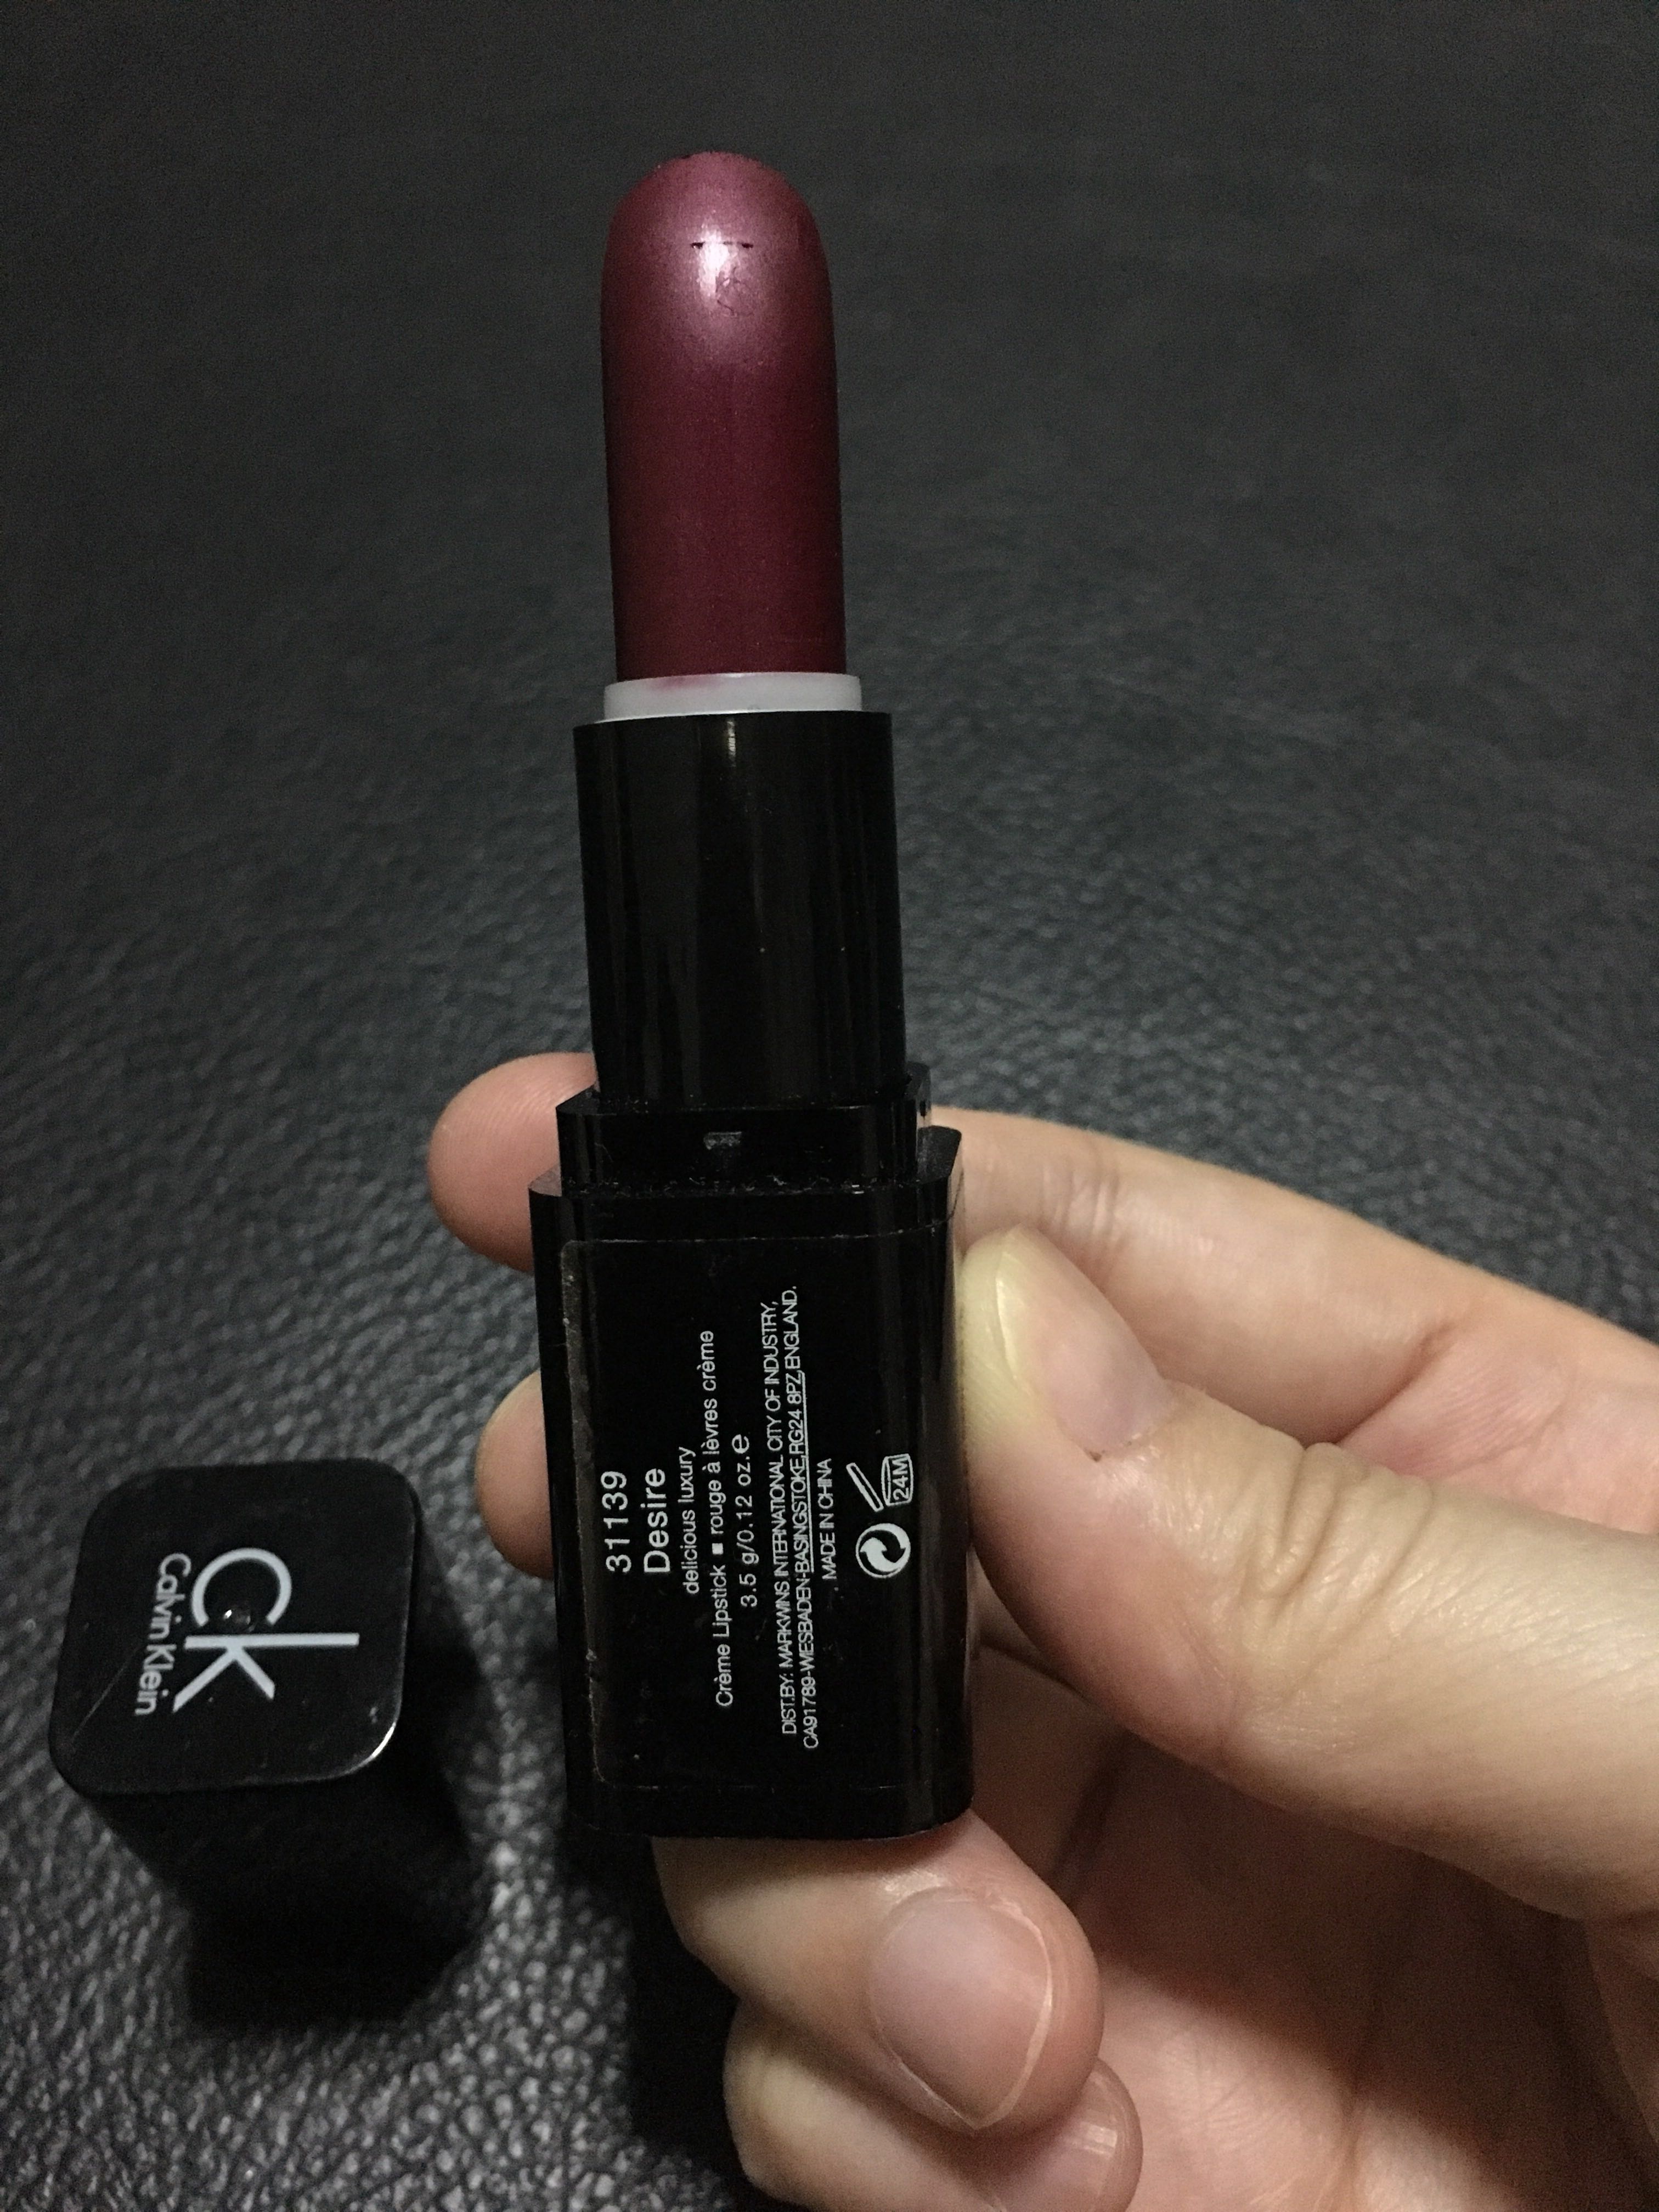 Calvin Klein Delicious Luxury Creme Lipstick (All Colors) - Reviews